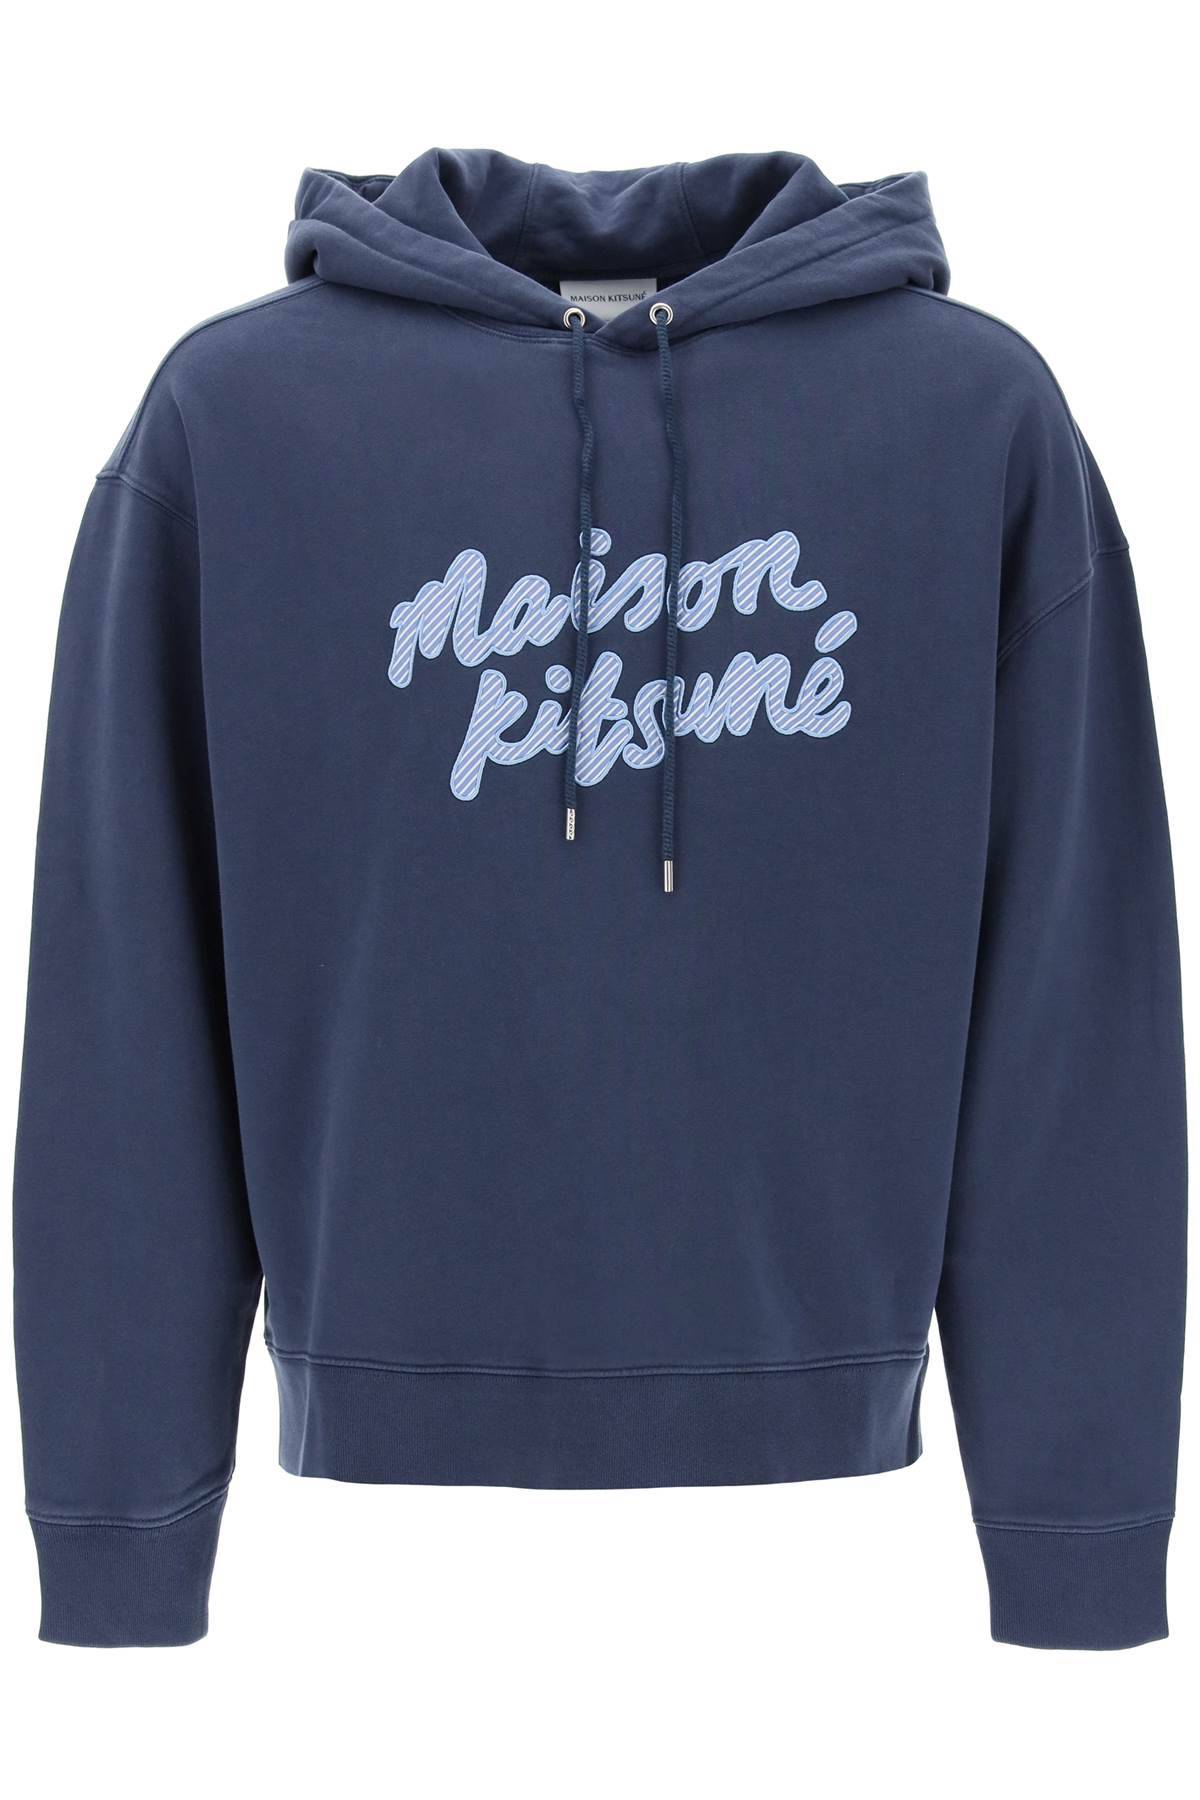 Maison Kitsuné MAISON KITSUNE hooded sweatshirt with embroidered logo